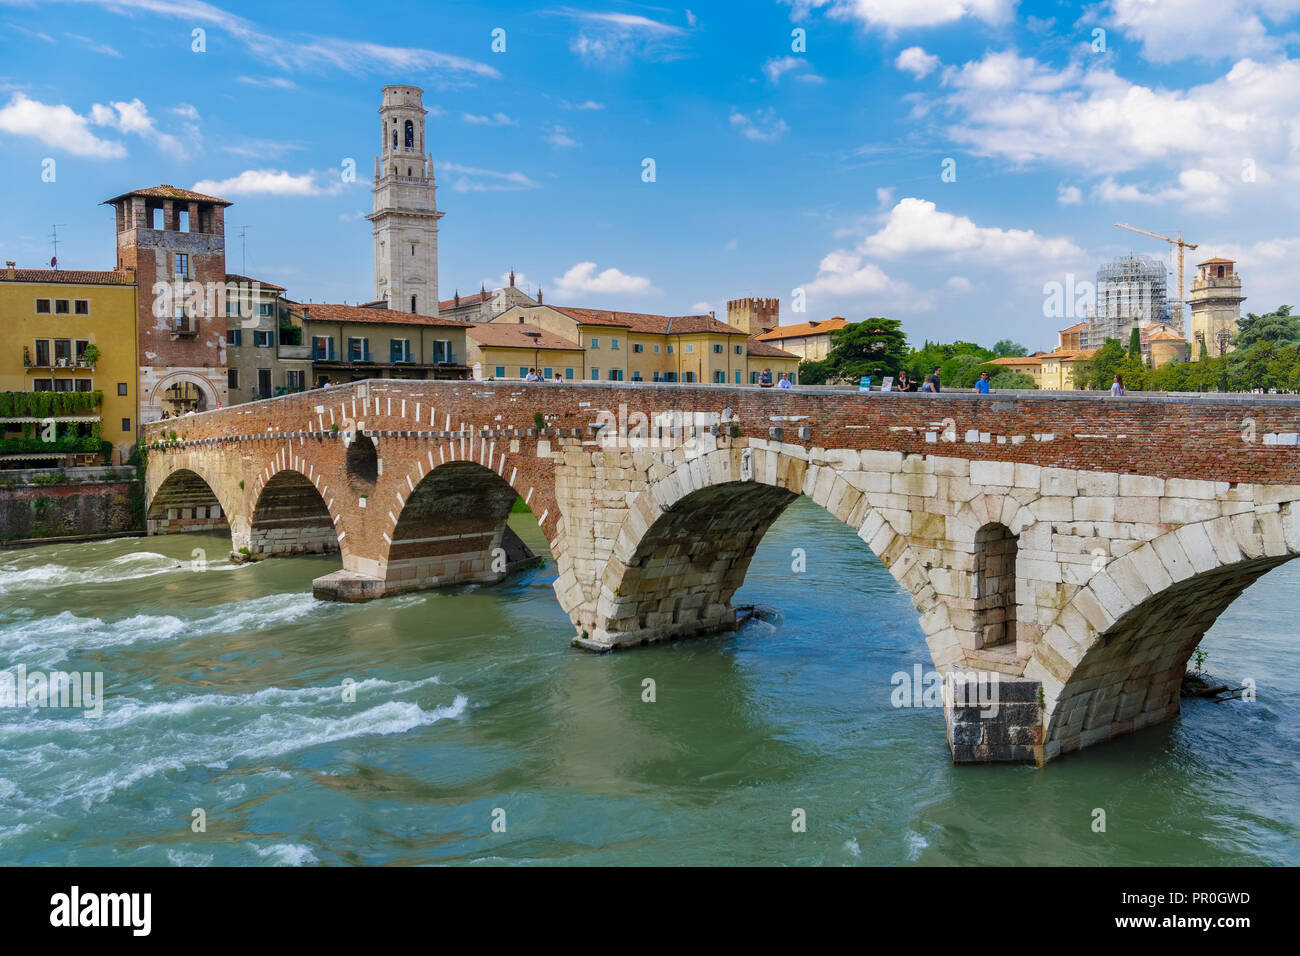 Ponte Pietra, la pietra arco romano ponte che attraversa il fiume Adige, Verona, Veneto, Italia, Europa Foto Stock